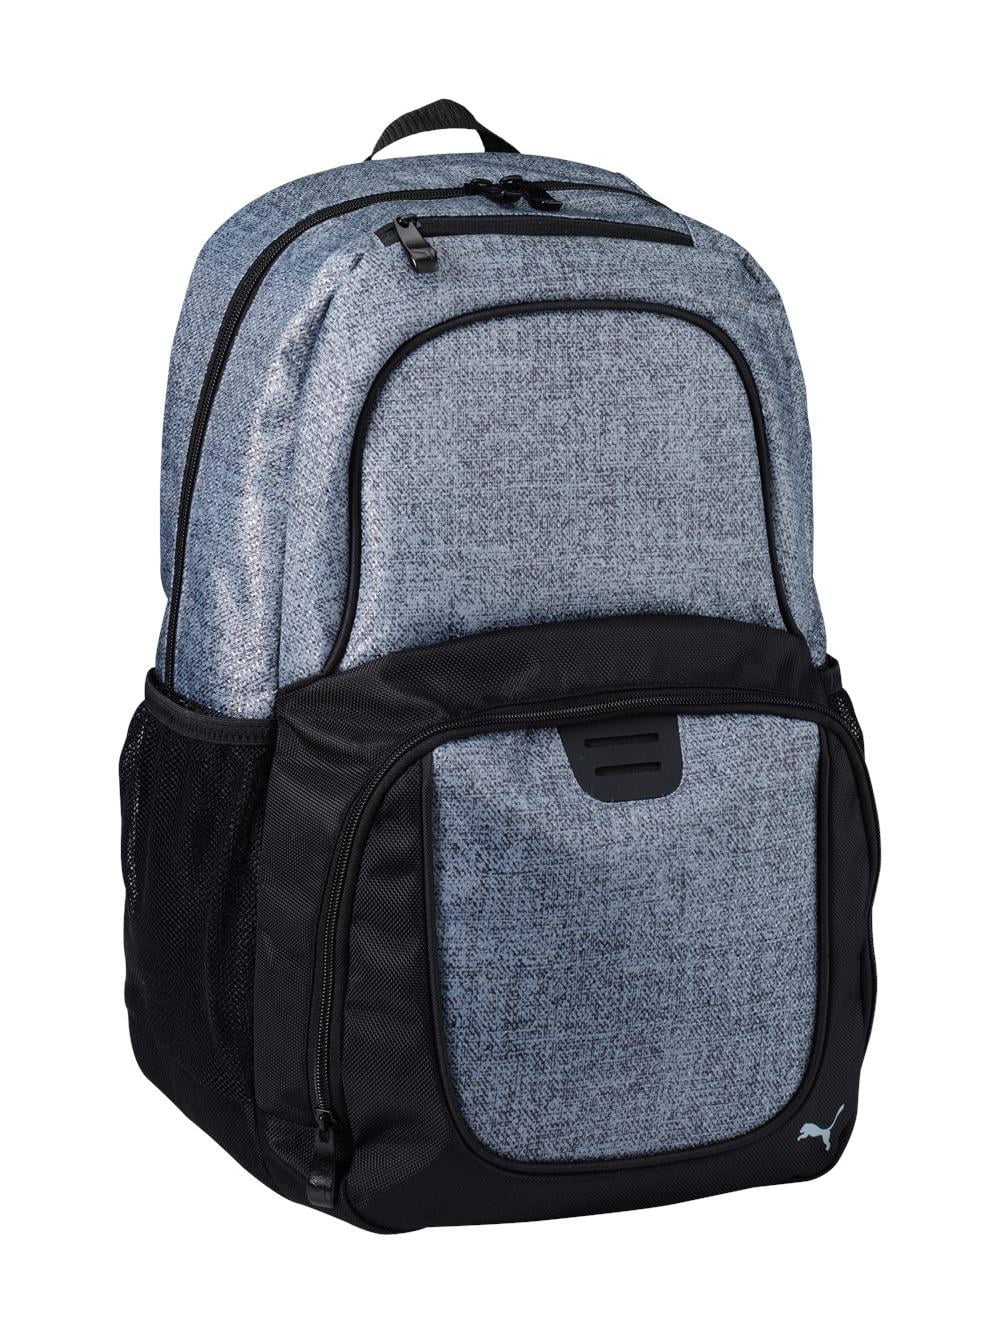 Puma - 25L Backpack - PSC1028 - Heather Grey/ Black - Size: One Size ...